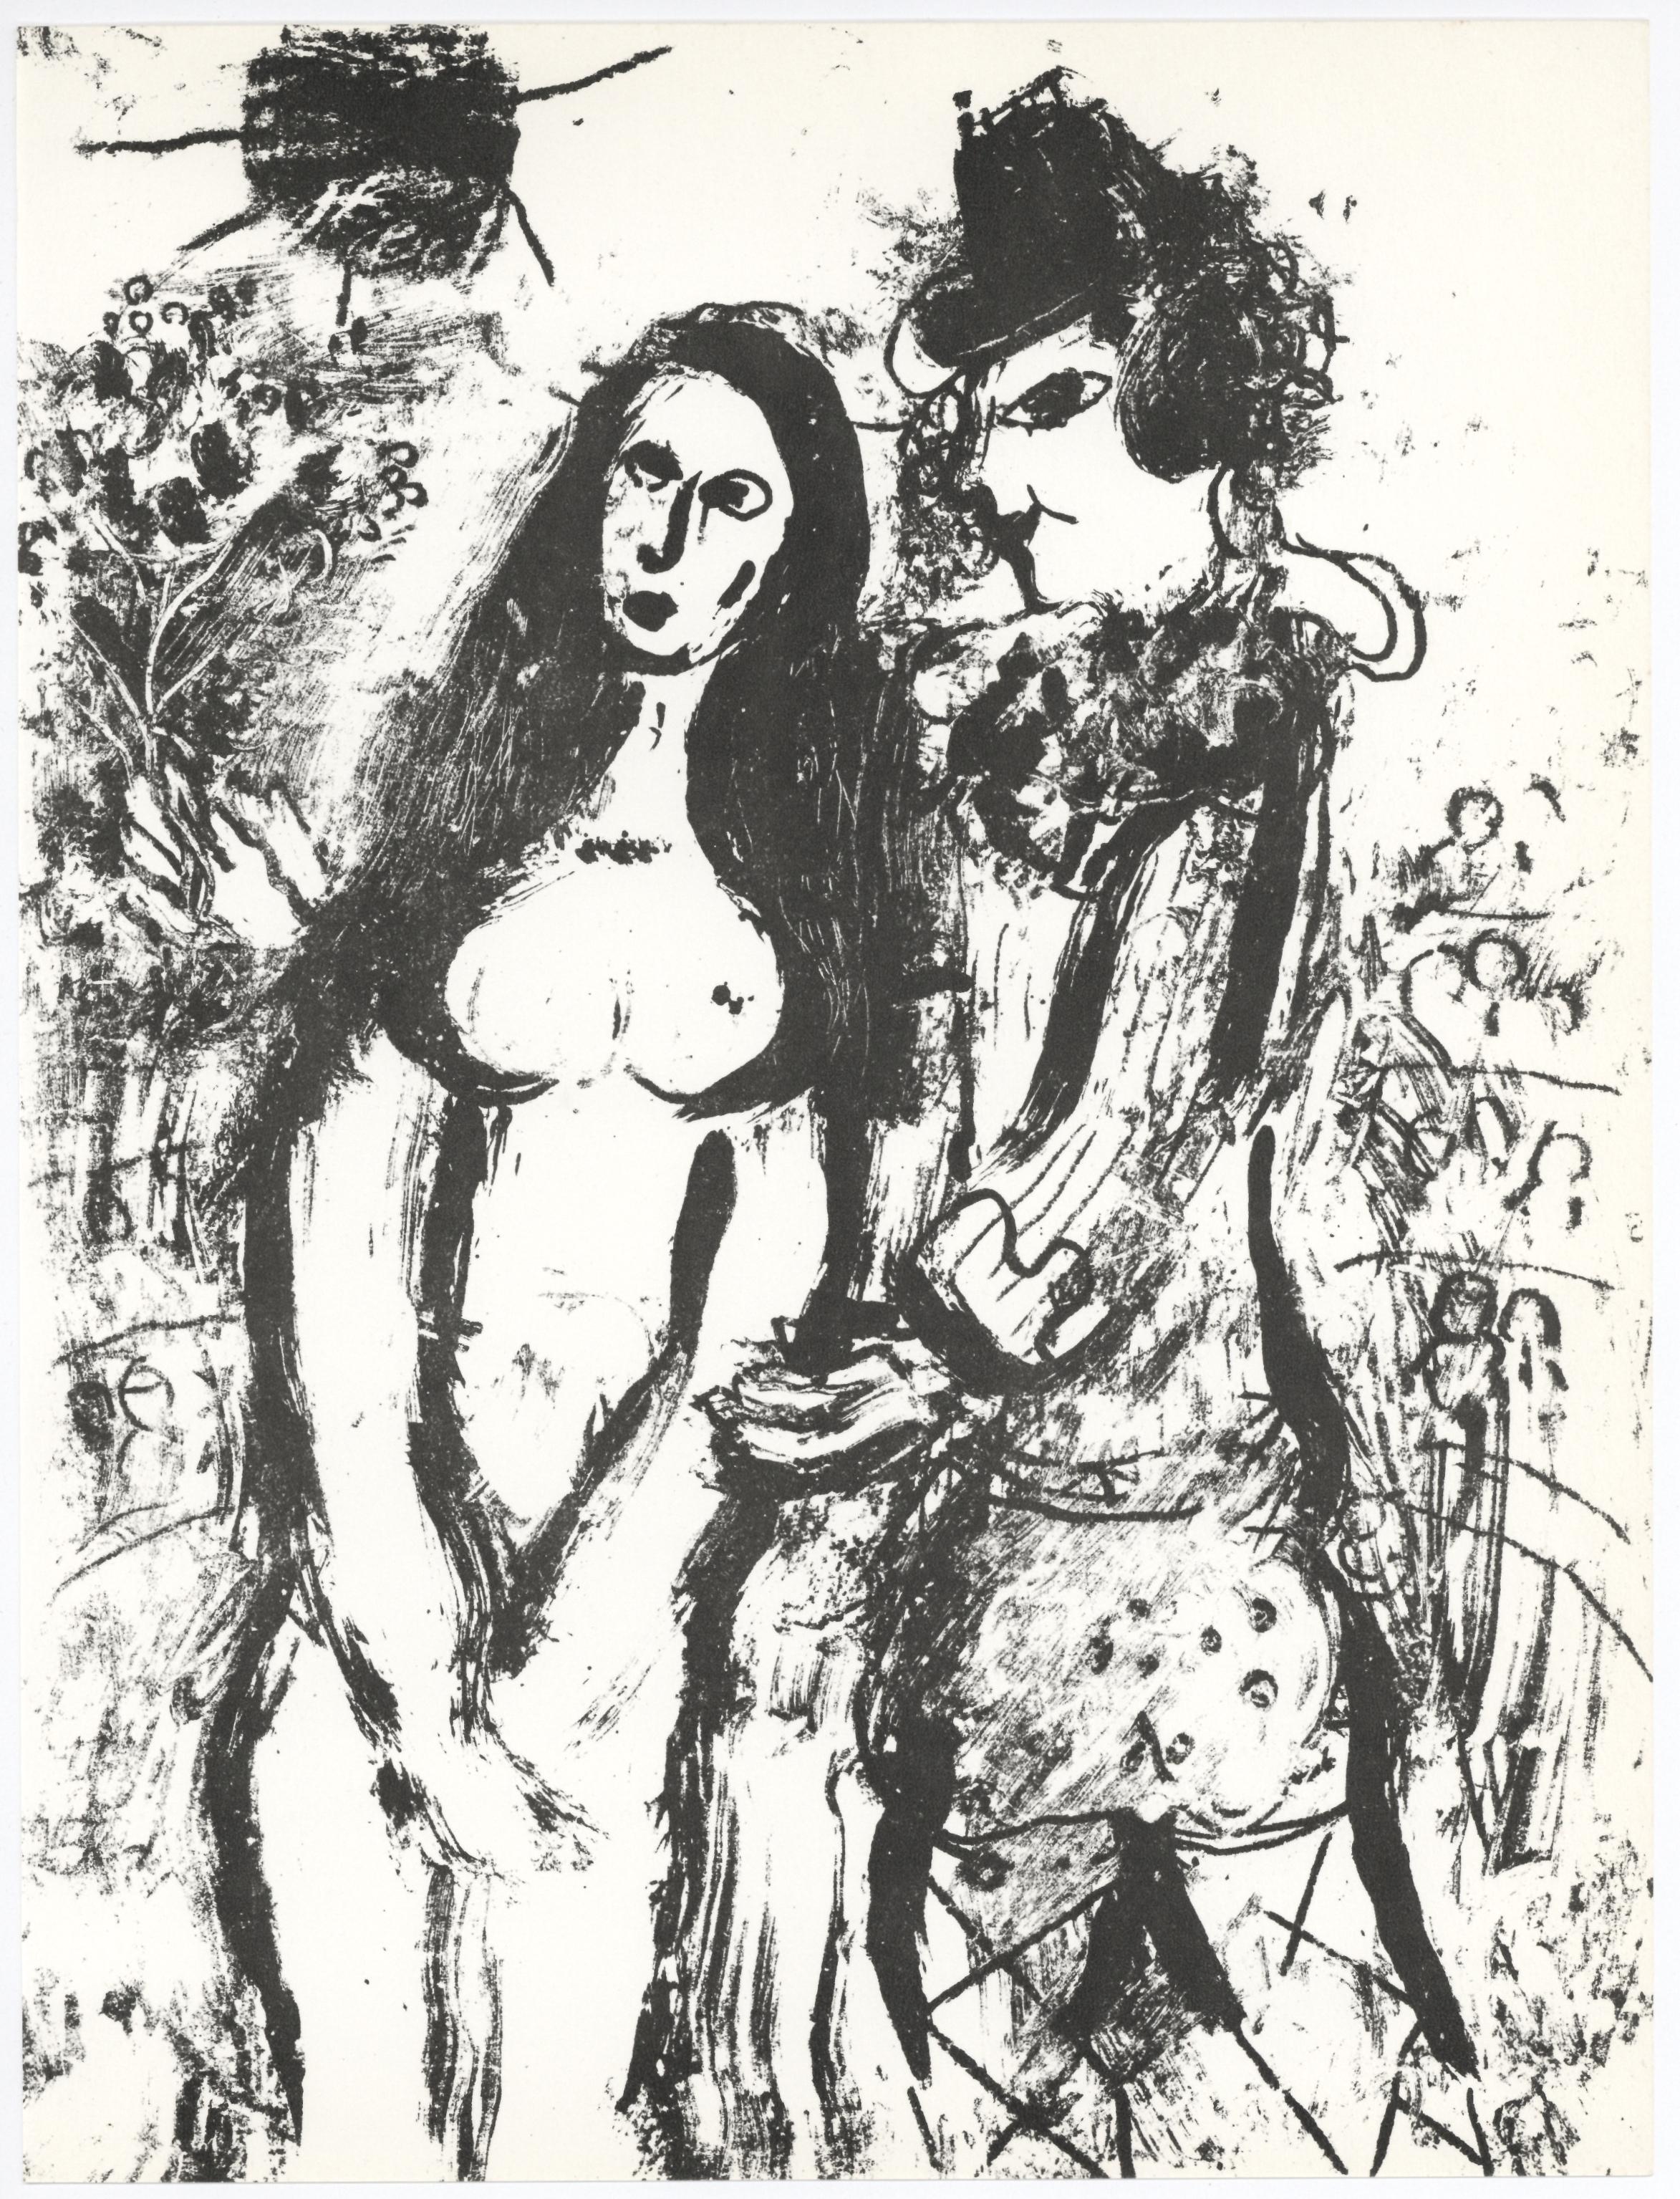 Marc Chagall Portrait Print - "Clown in Love" original lithograph